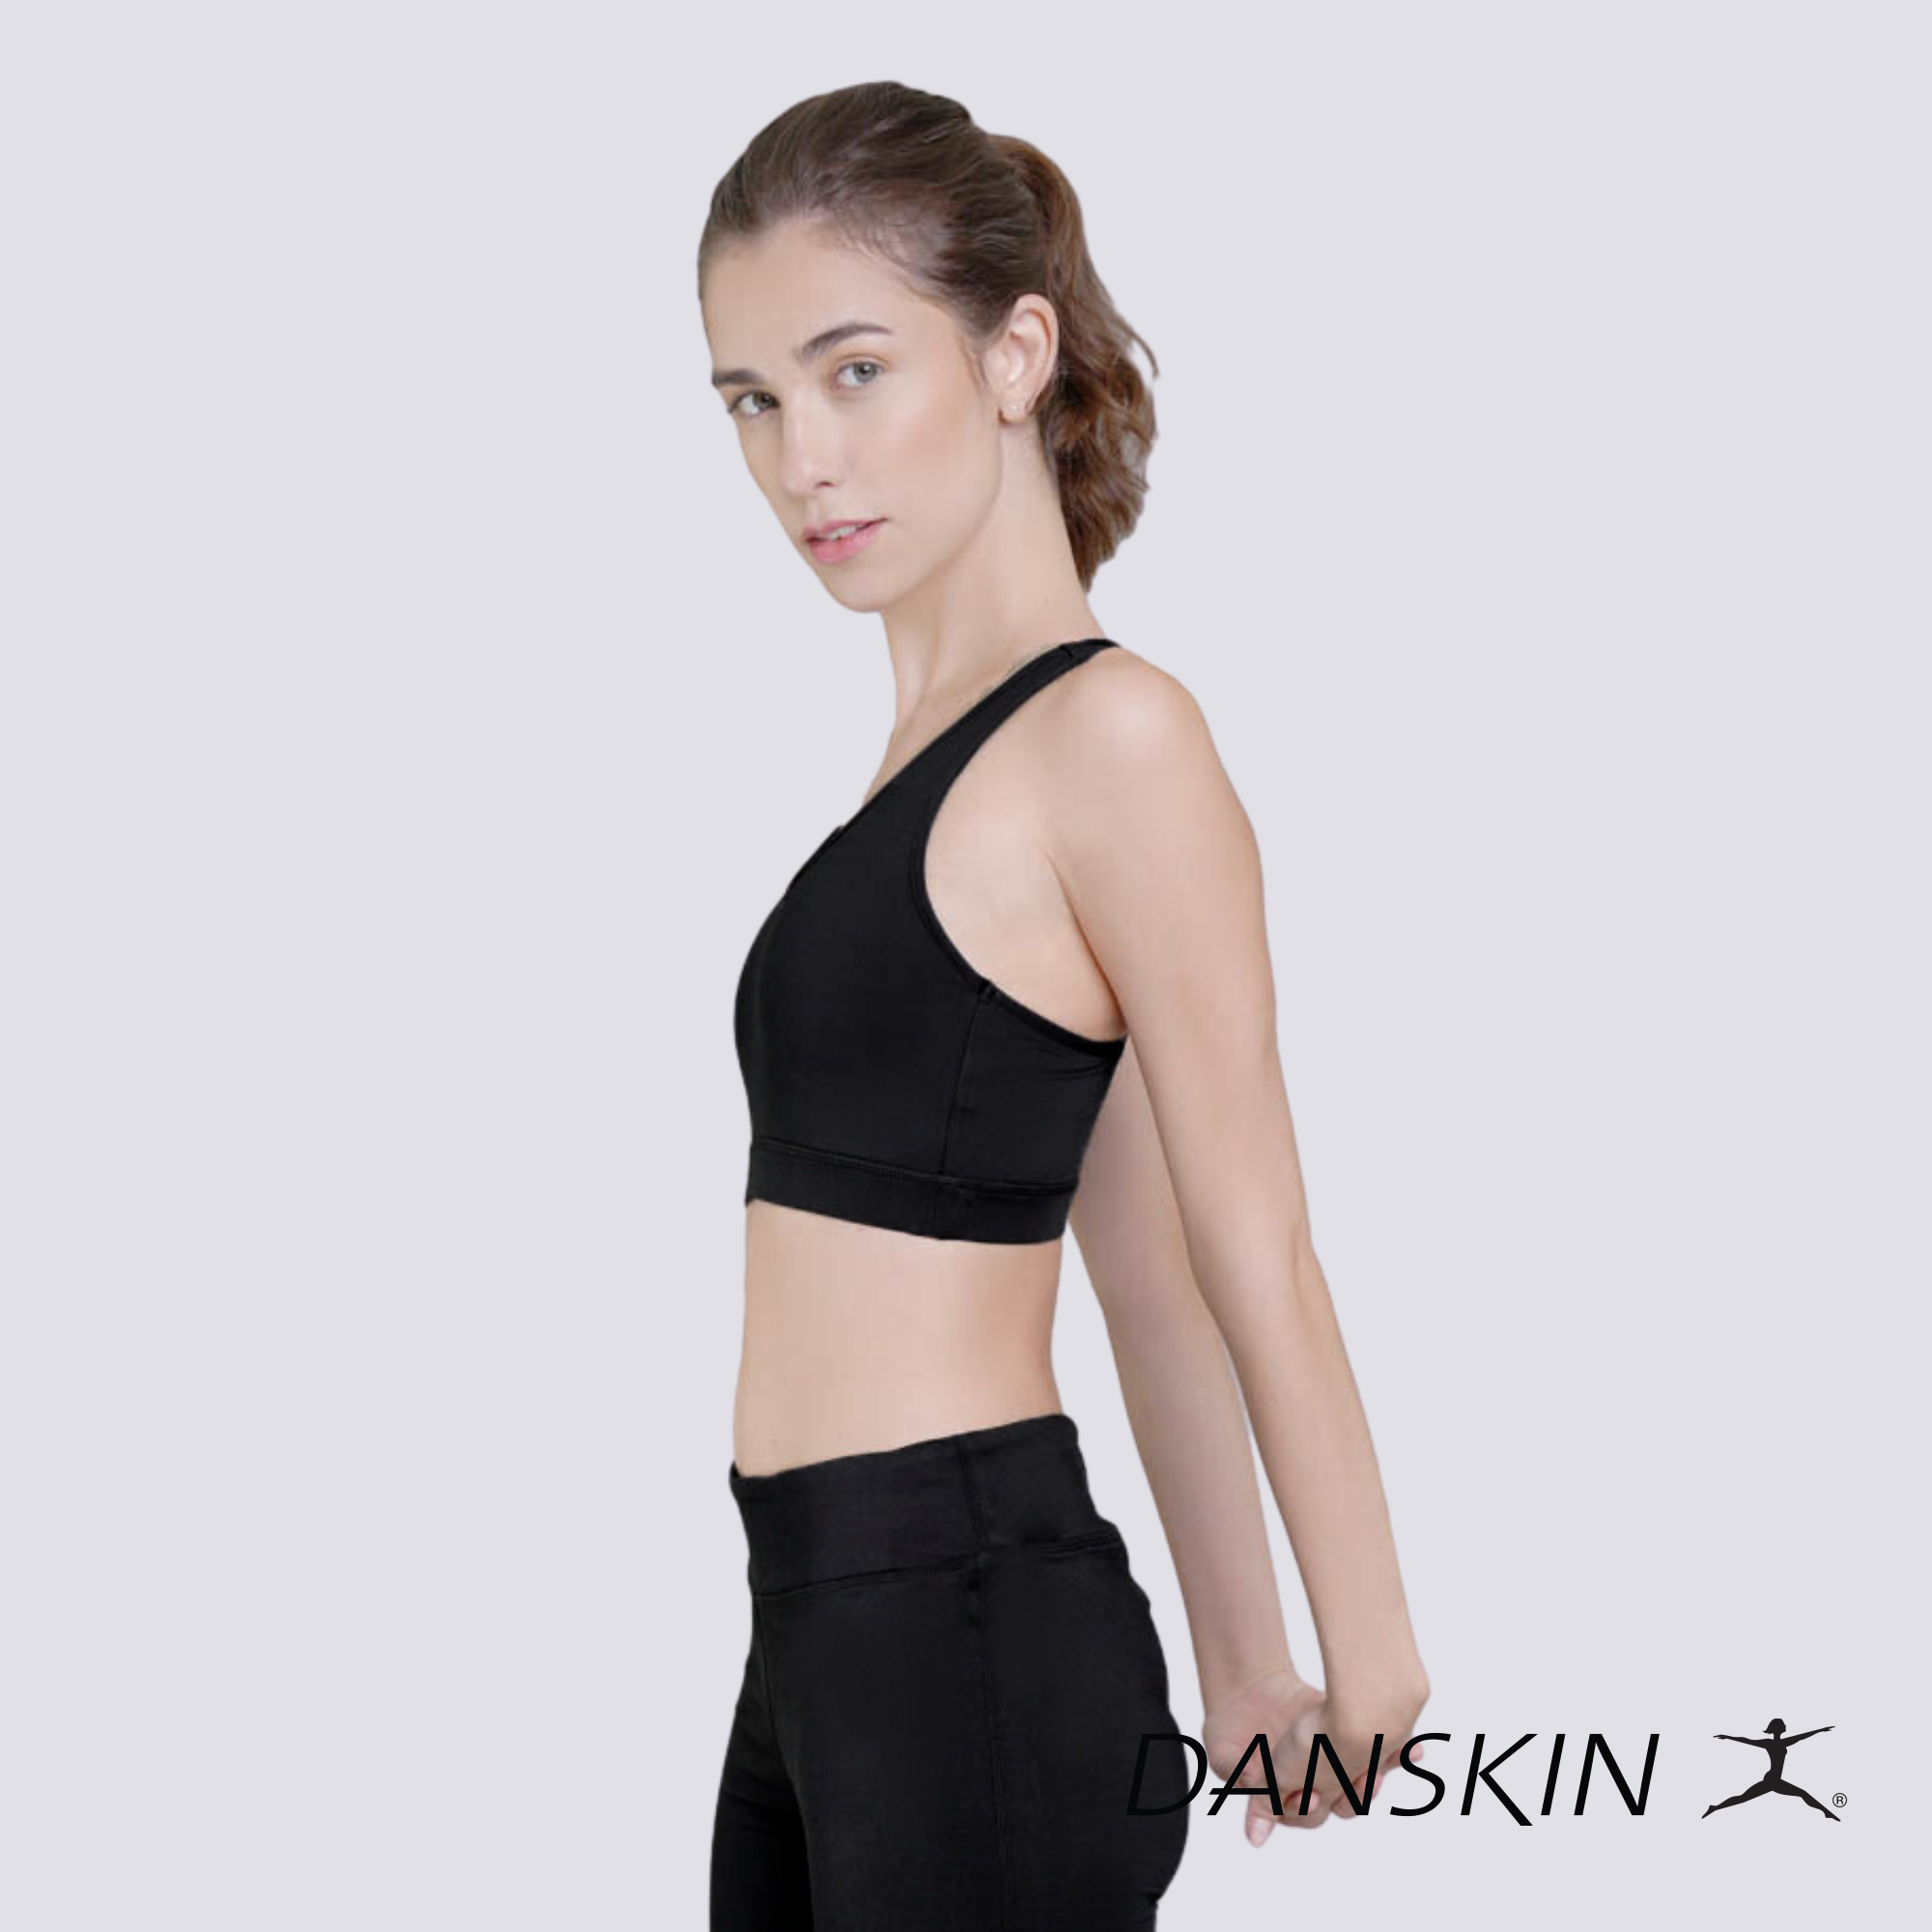 Danskin Essential Black Racerback Crop Top Sports Bra w/ Removable Pads for  Workout Gym Training Wear Athleisure Women Activewear